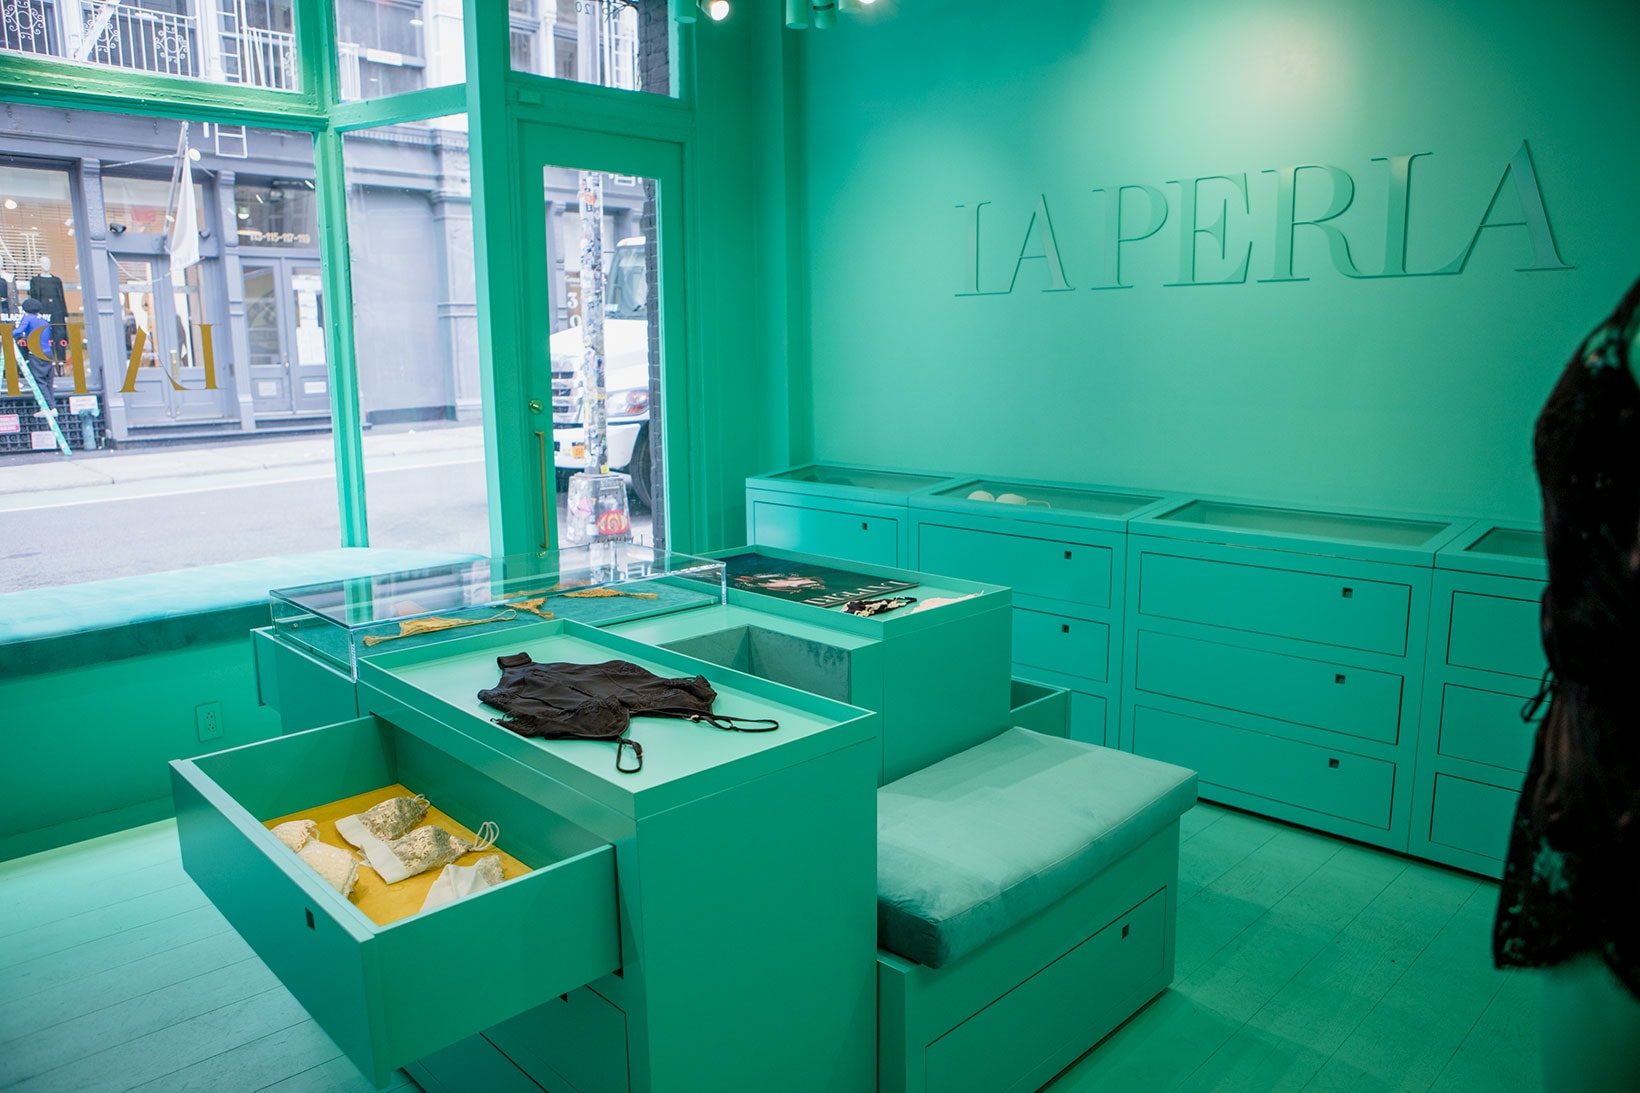 Inside La Perla's new flagship store